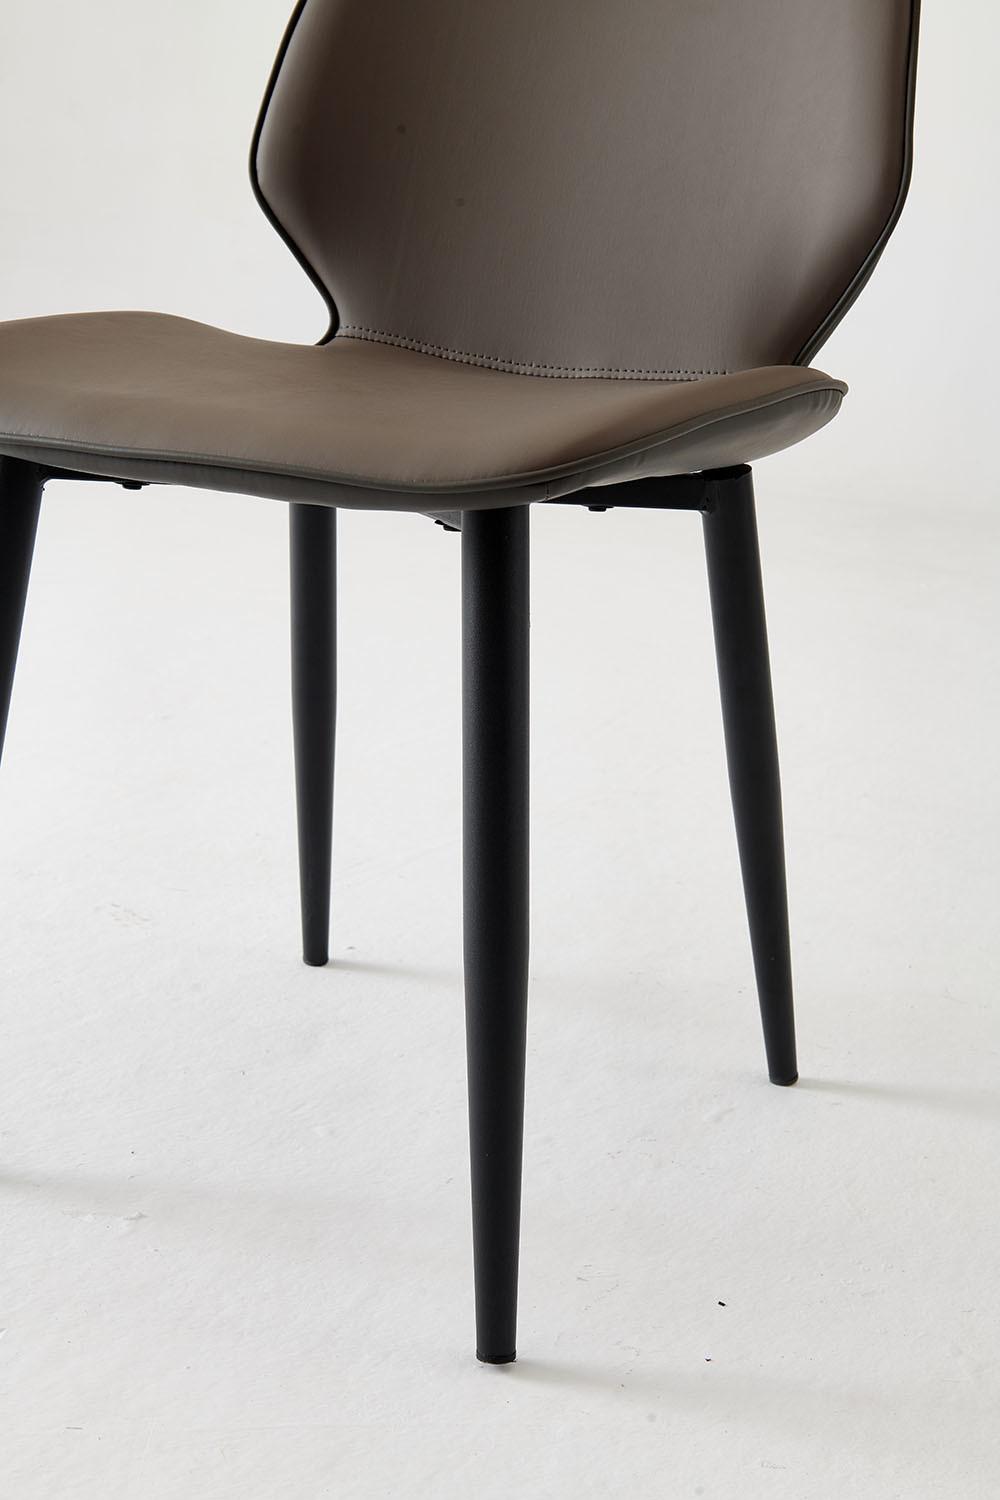 Modern New Design Furniture Brown Office Chair